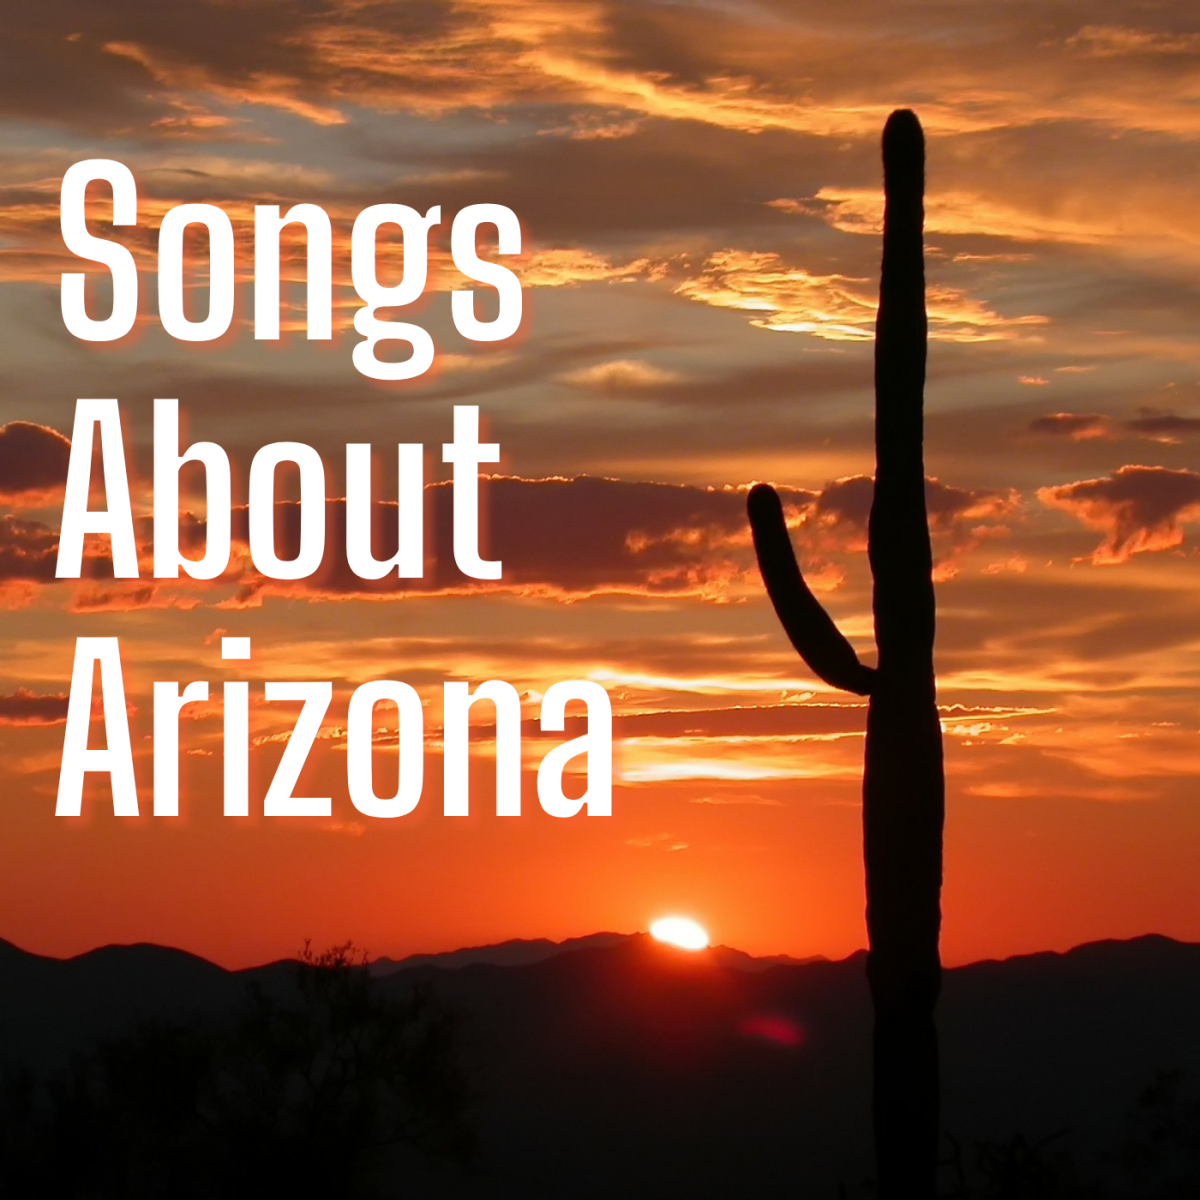 48 Songs About Arizona